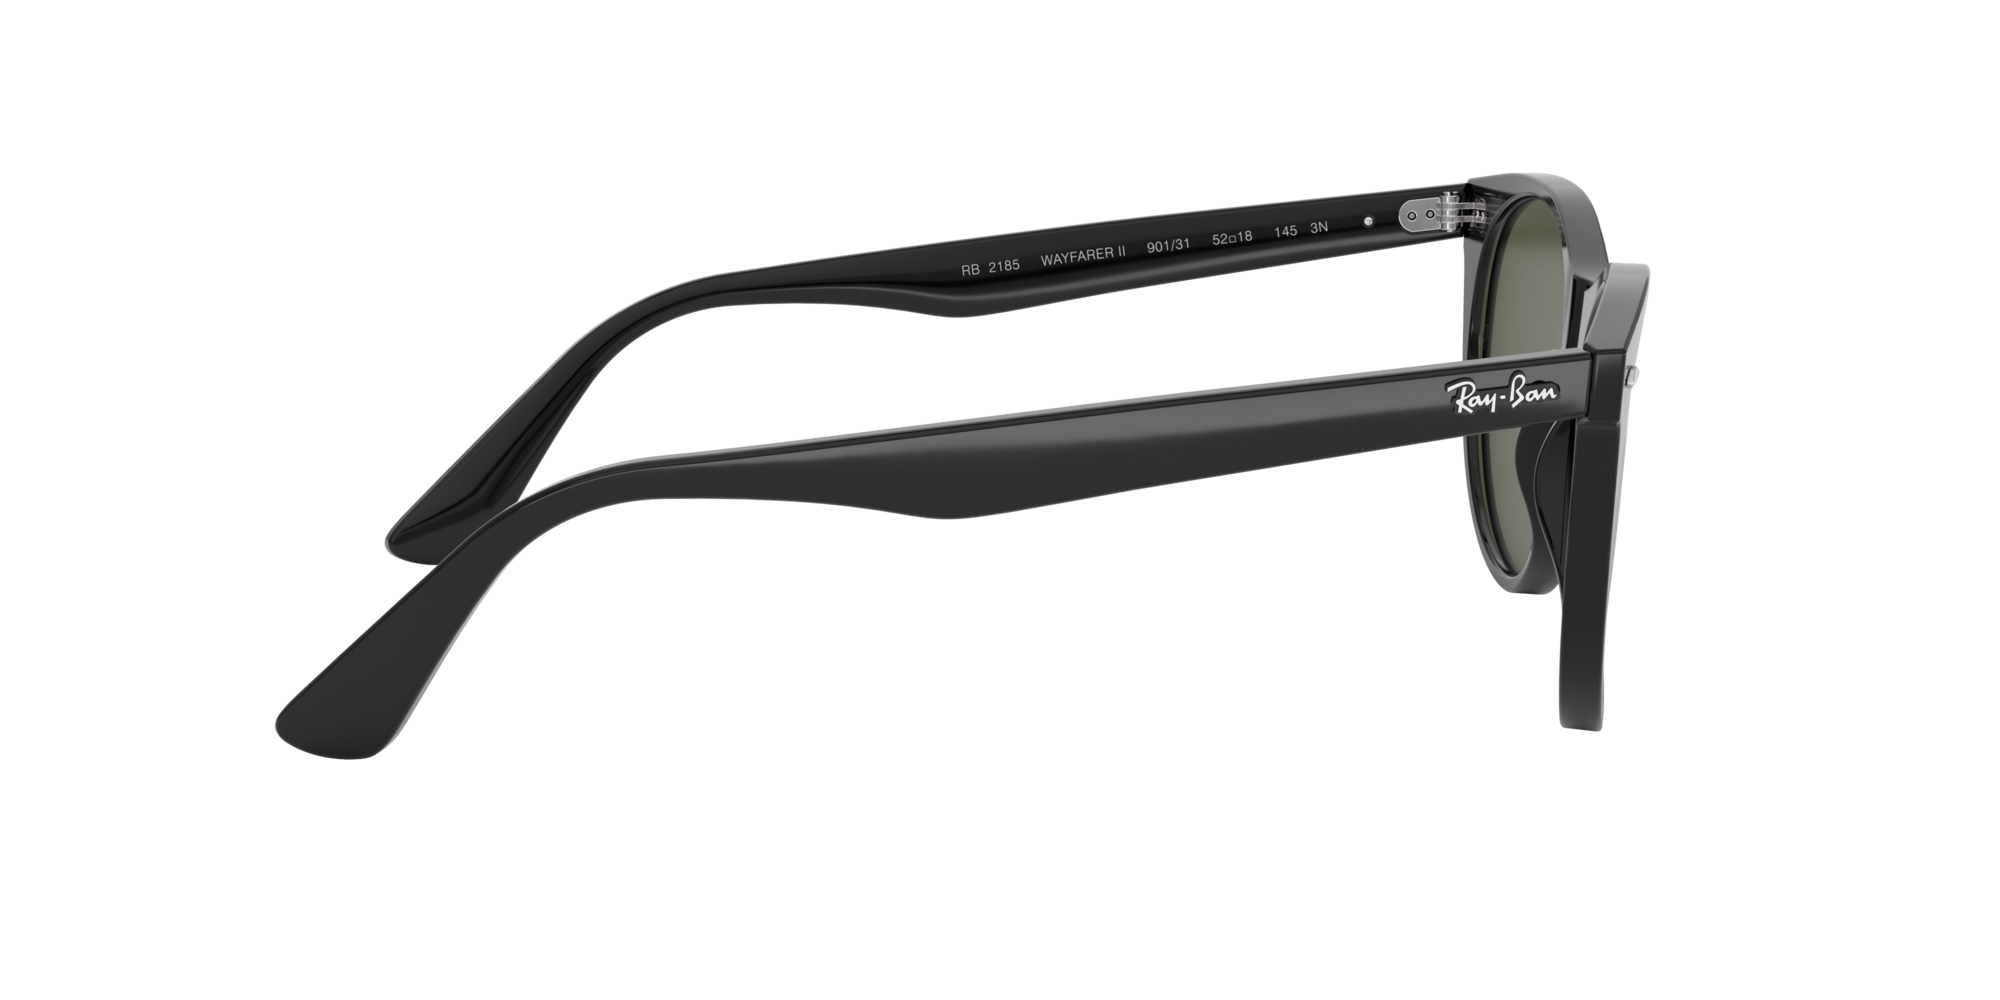 Ray Ban Rb2185 55 Wayfarer Ii Sunglasses Lenscrafters